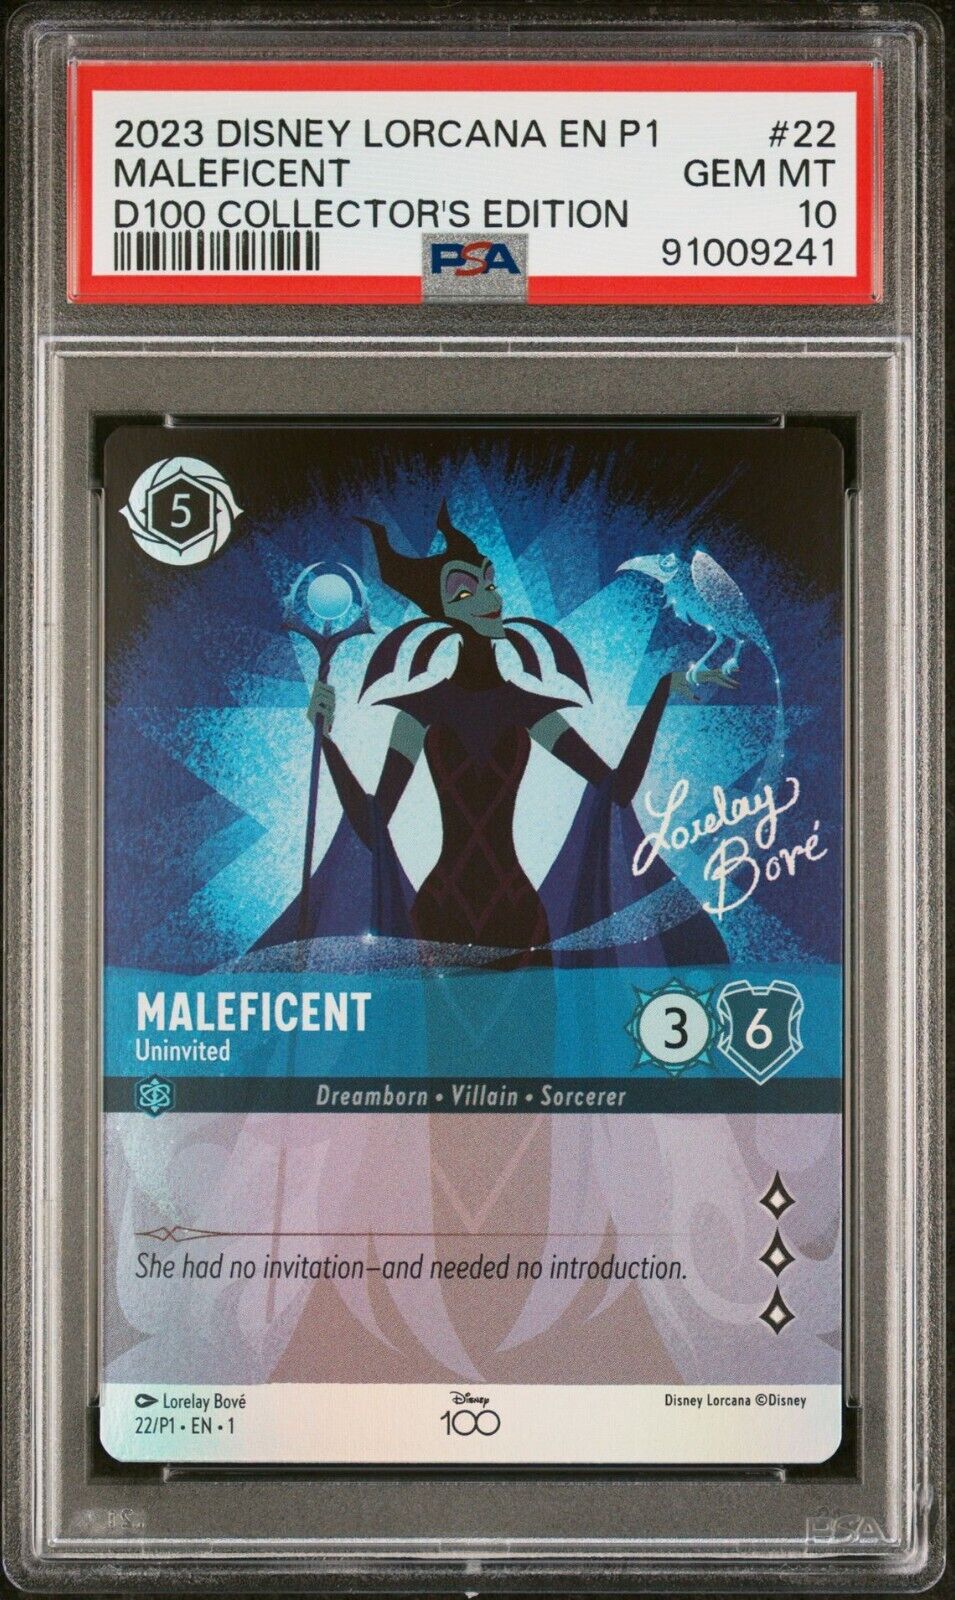 Disney Lorcana Maleficent Uninvited D100 Collector\'s Edition Promo 22/P1 PSA 10